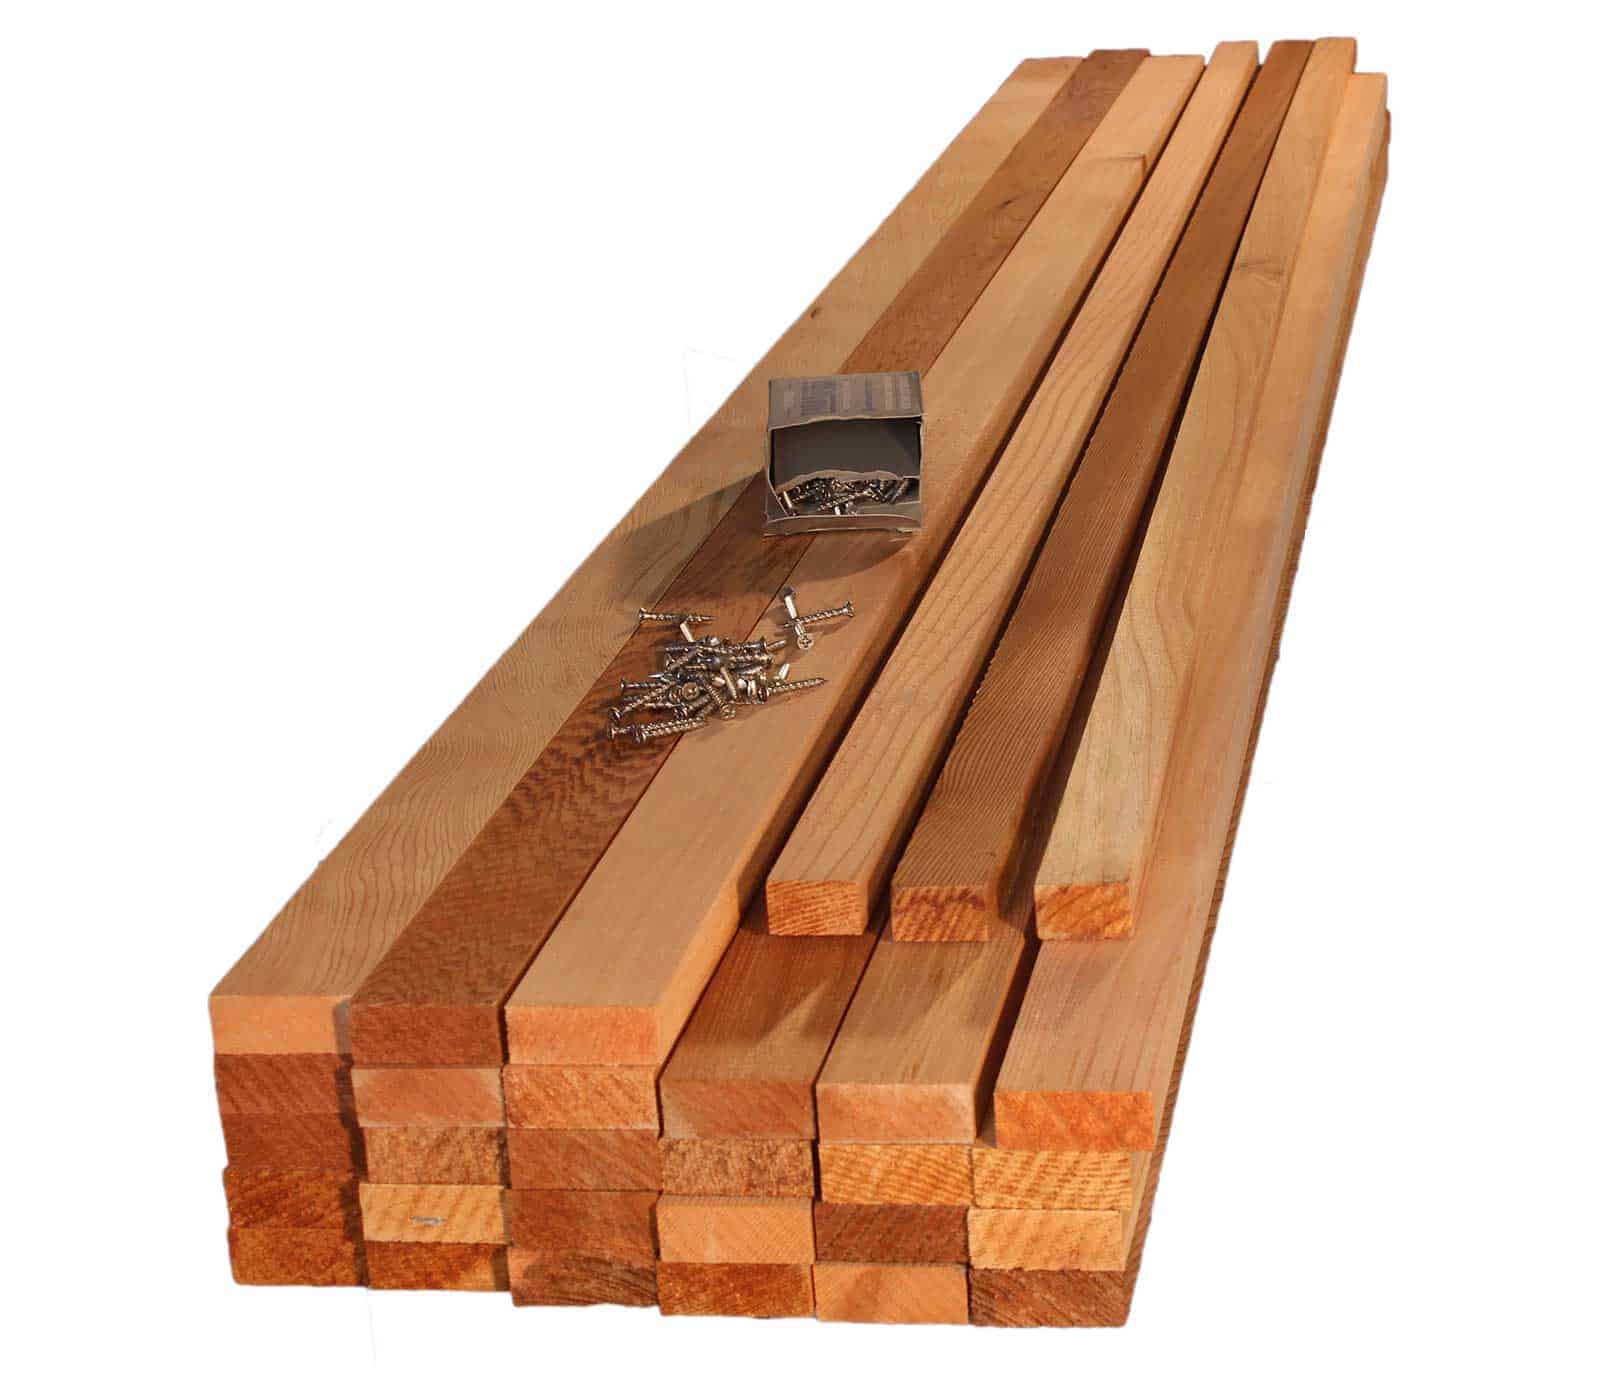 DIY Cedar Panel Kit 183cm W - Creates a slatted Cedar panel